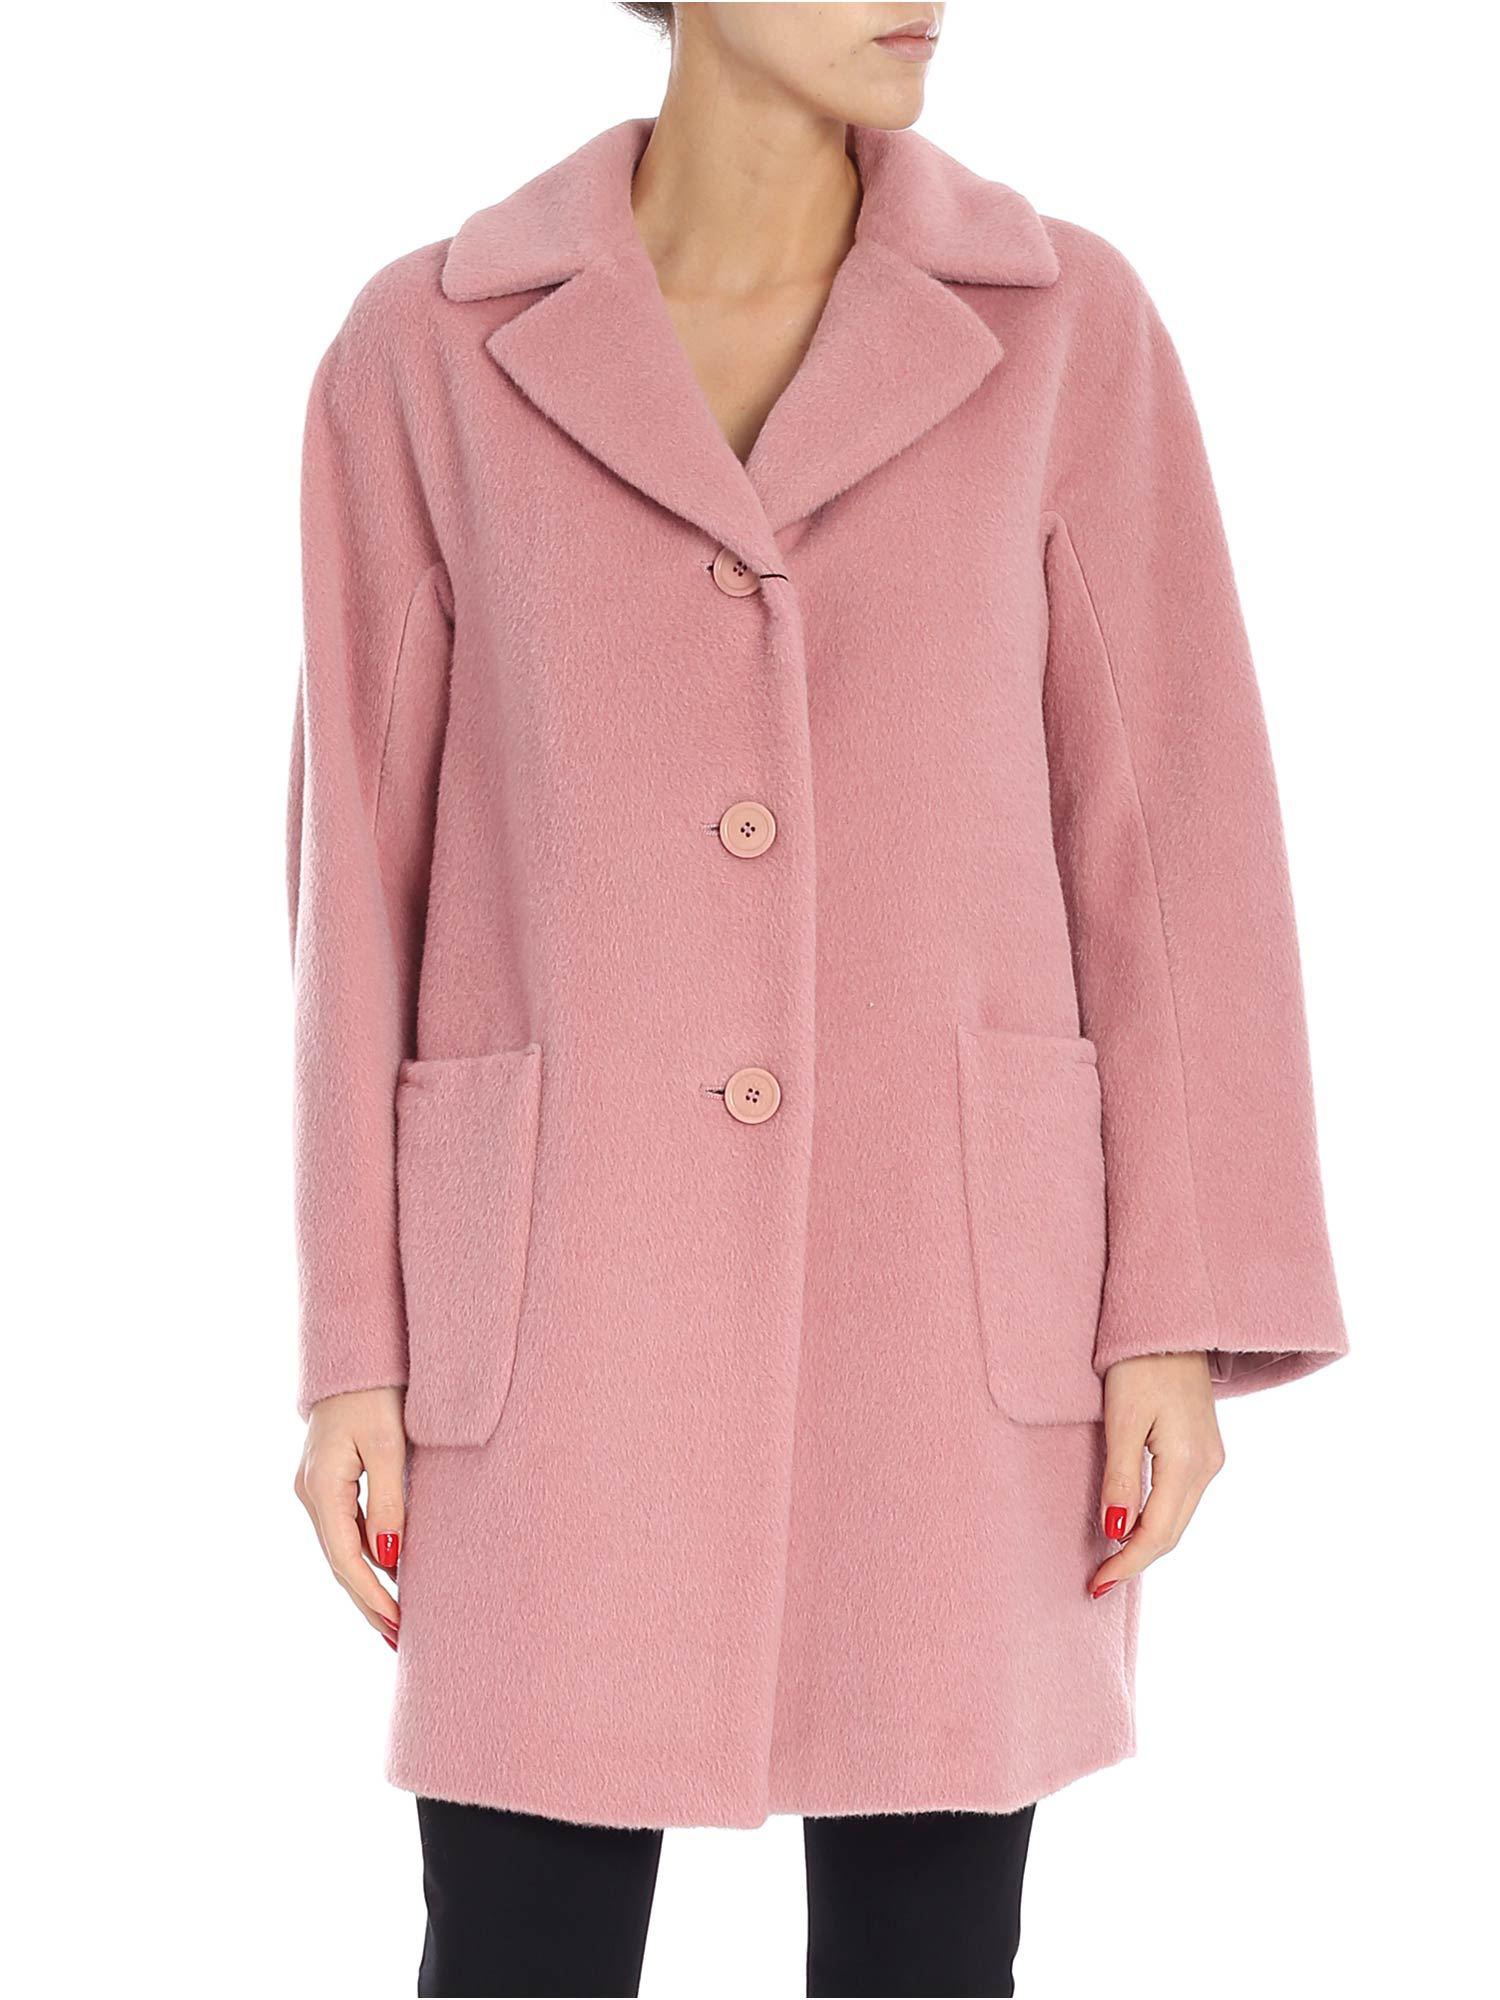 Max Mara Weekend Pink Coat Top Sellers, 58% OFF | ilikepinga.com